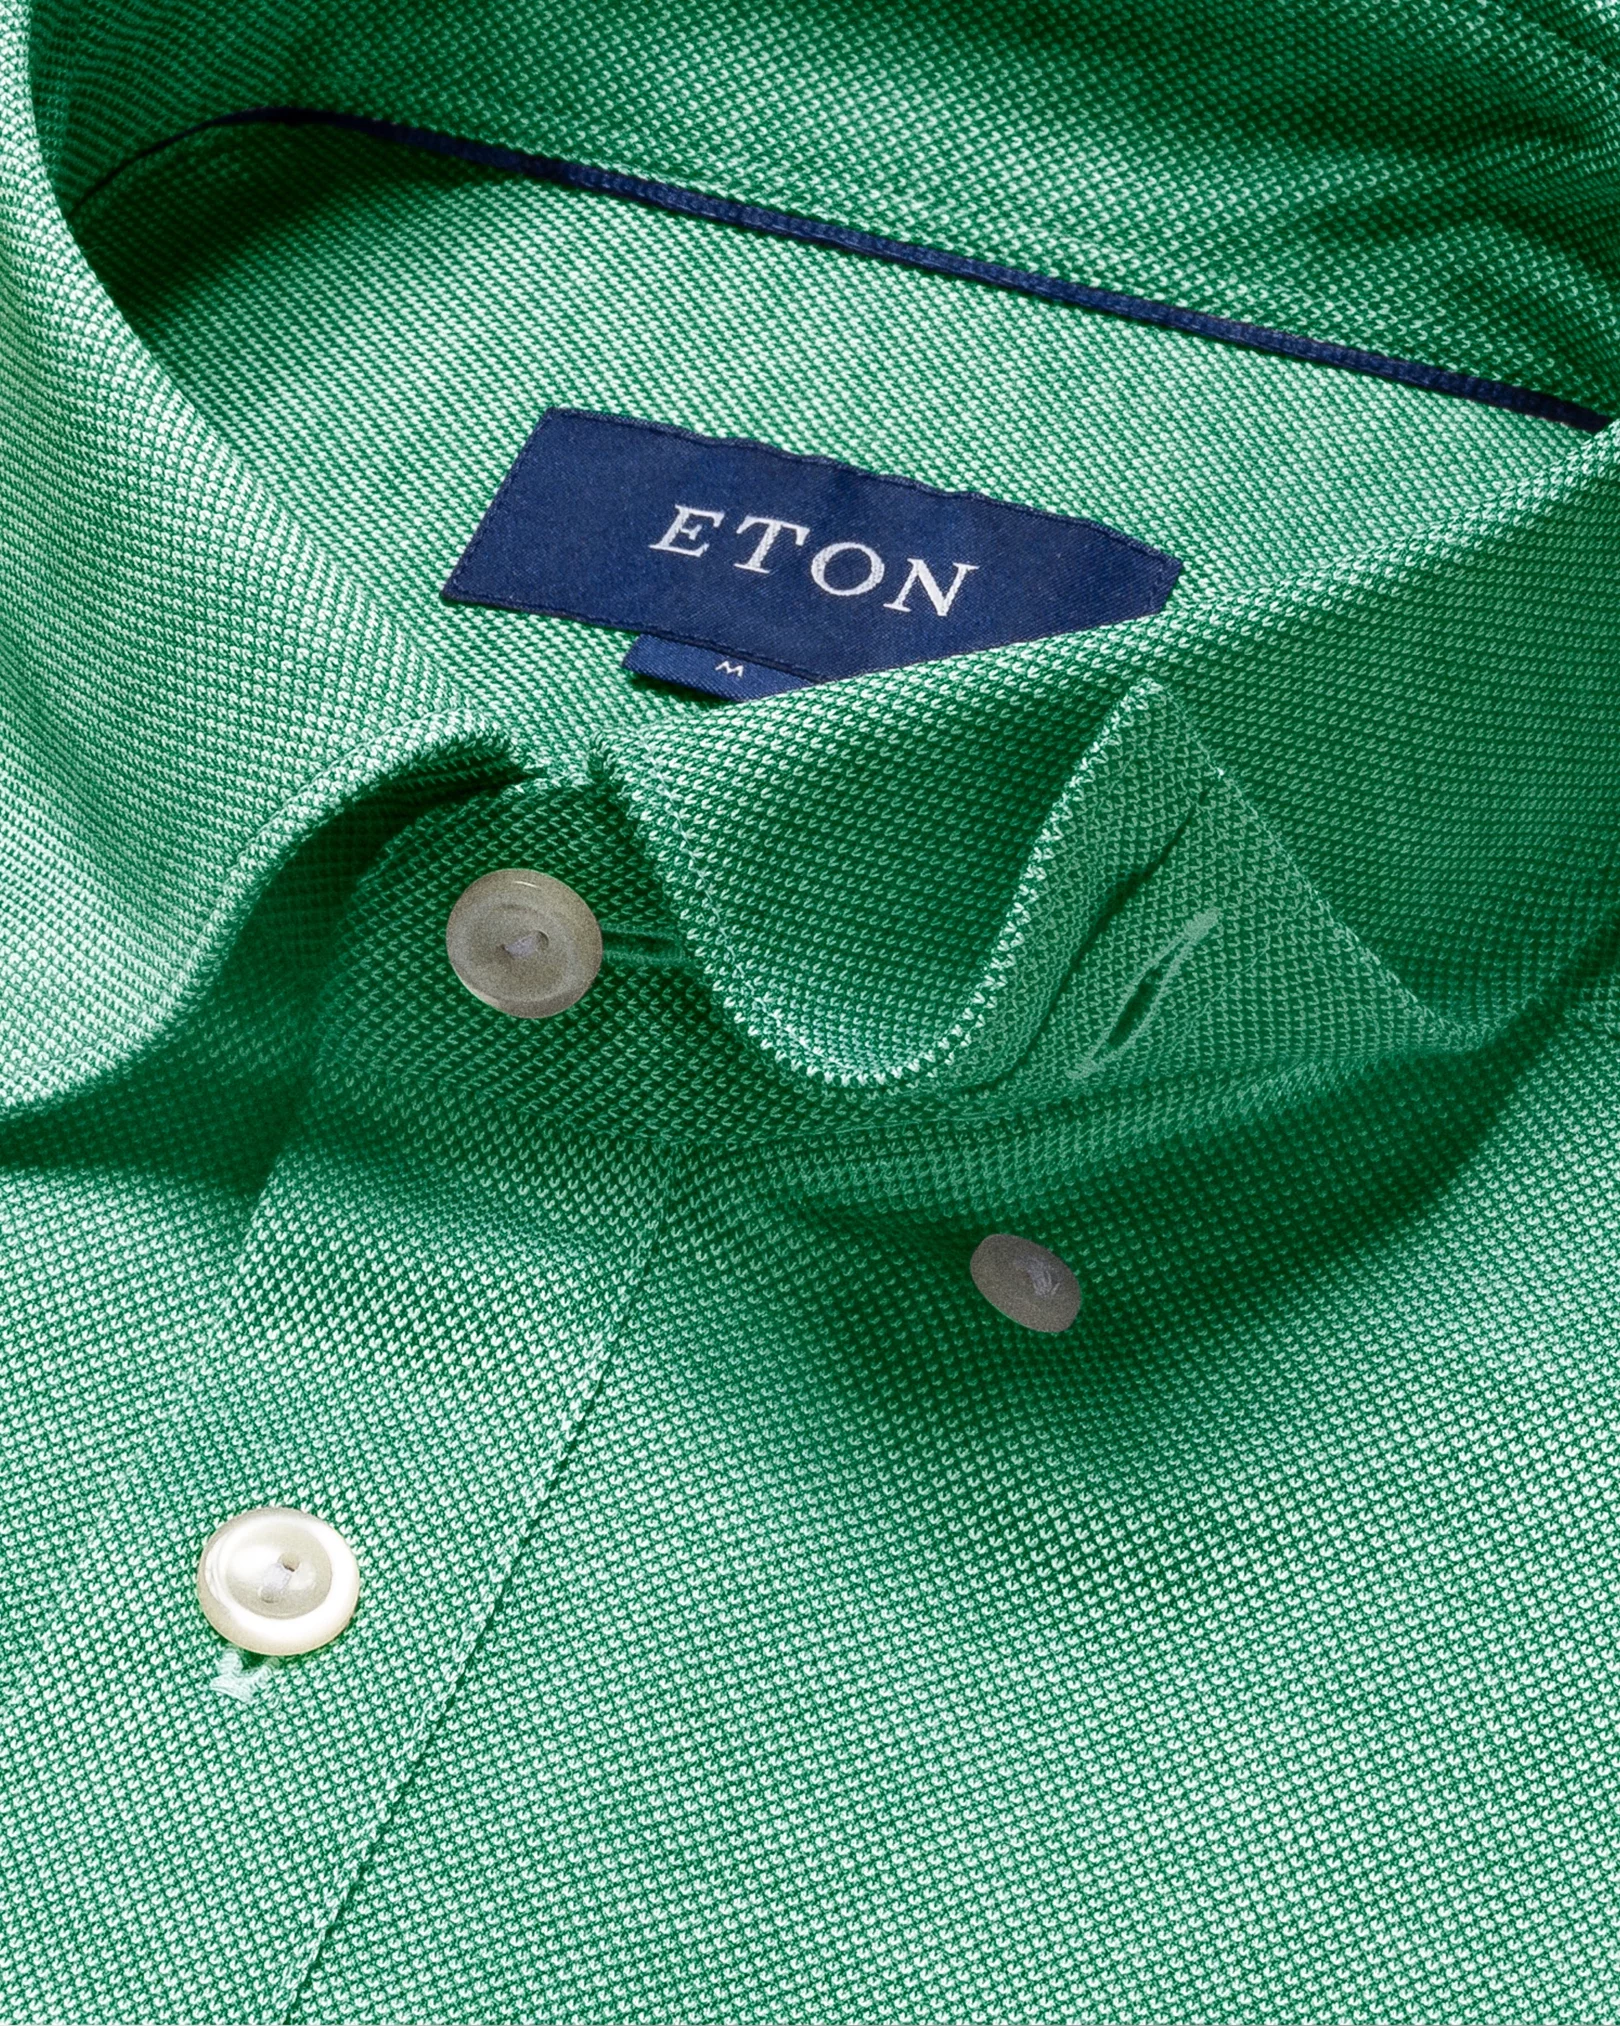 Eton - light green jersey regular fit